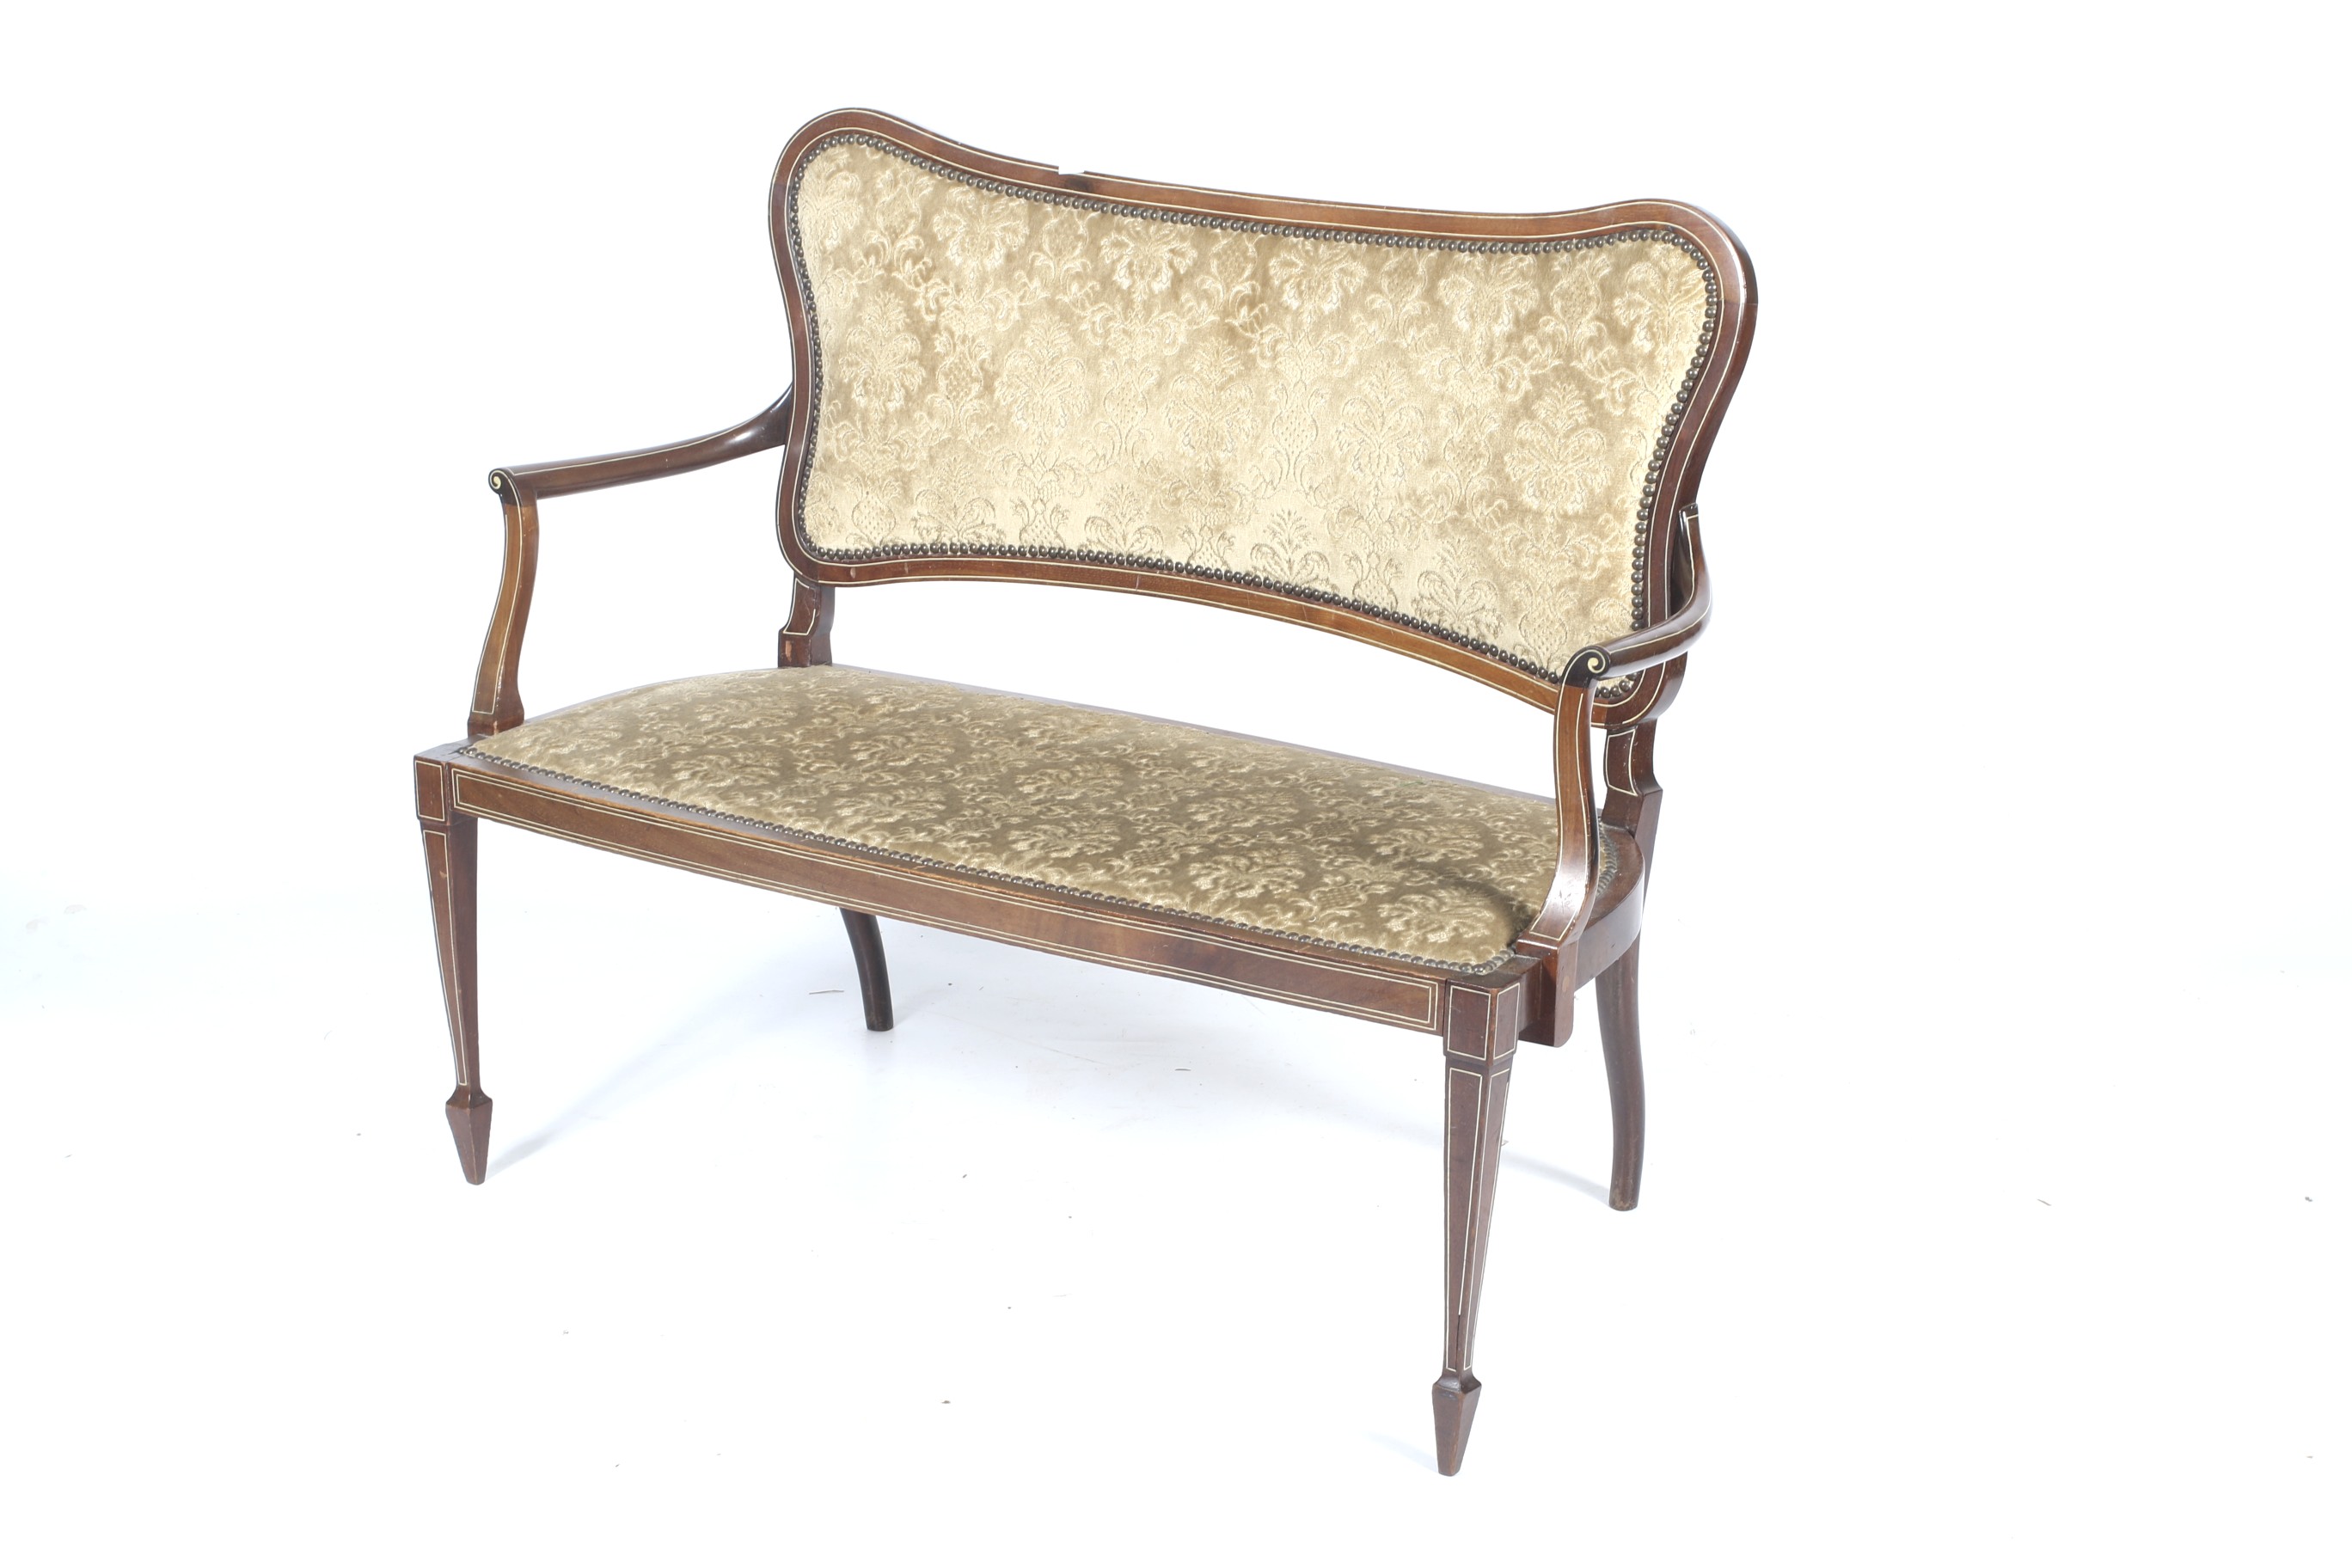 A 19th century inlaid mahogany two seater sofa.